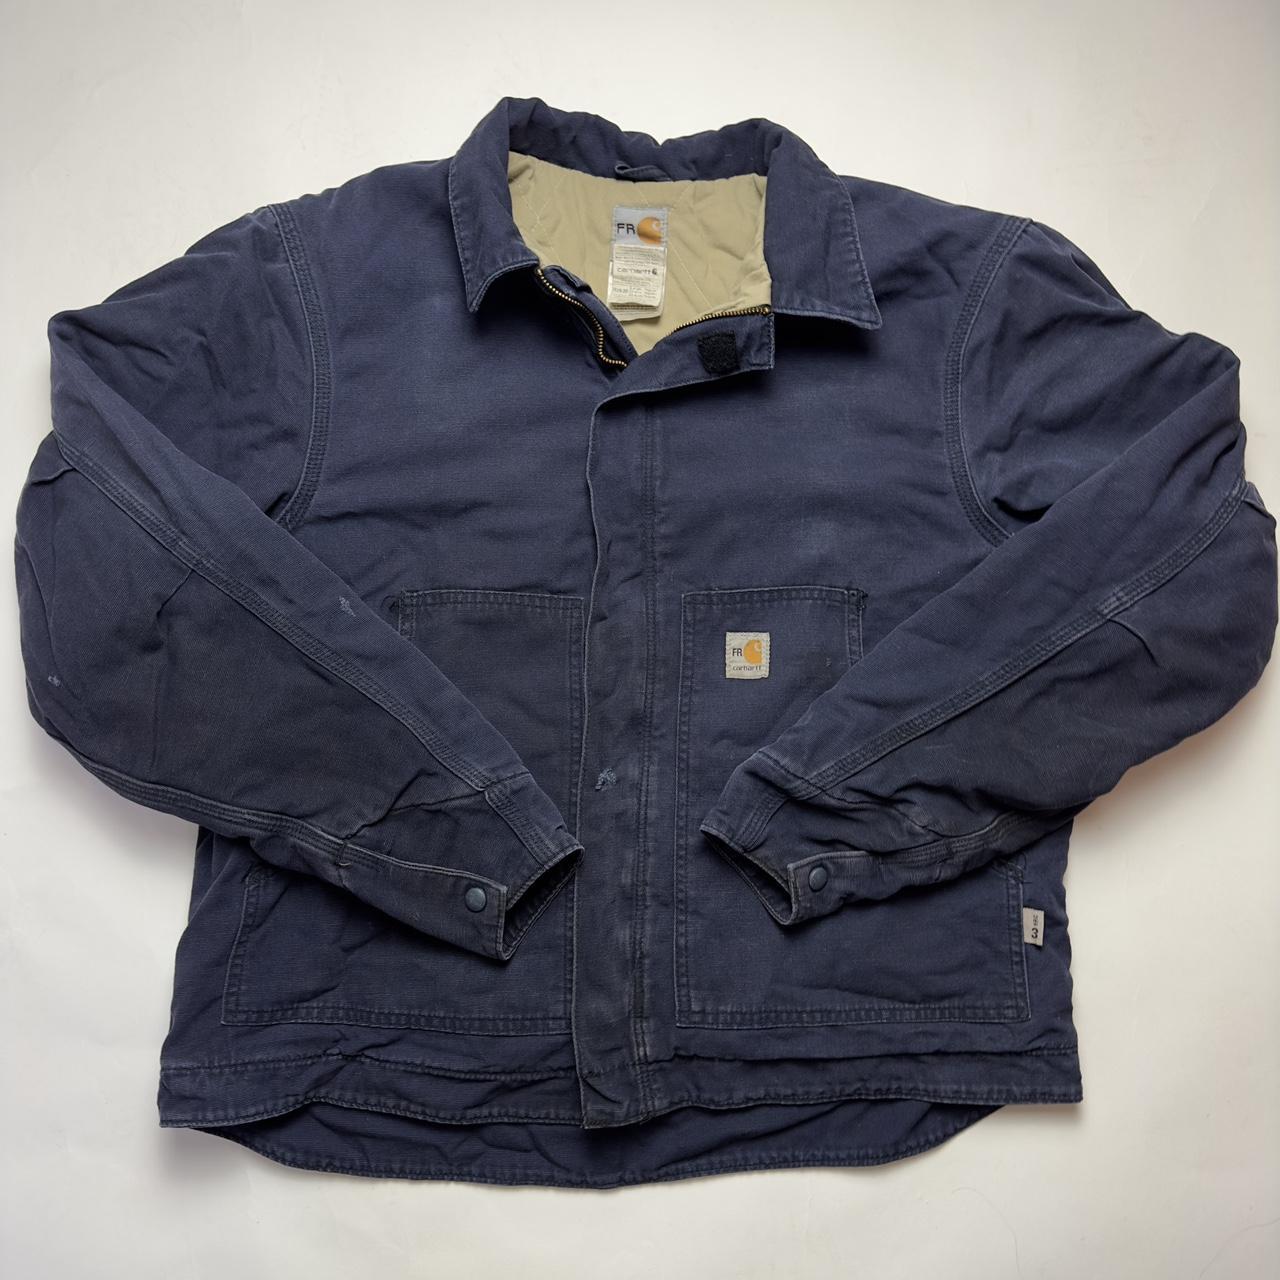 Carhartt Workwear Jacket Quilted Lining, Dearborn... - Depop